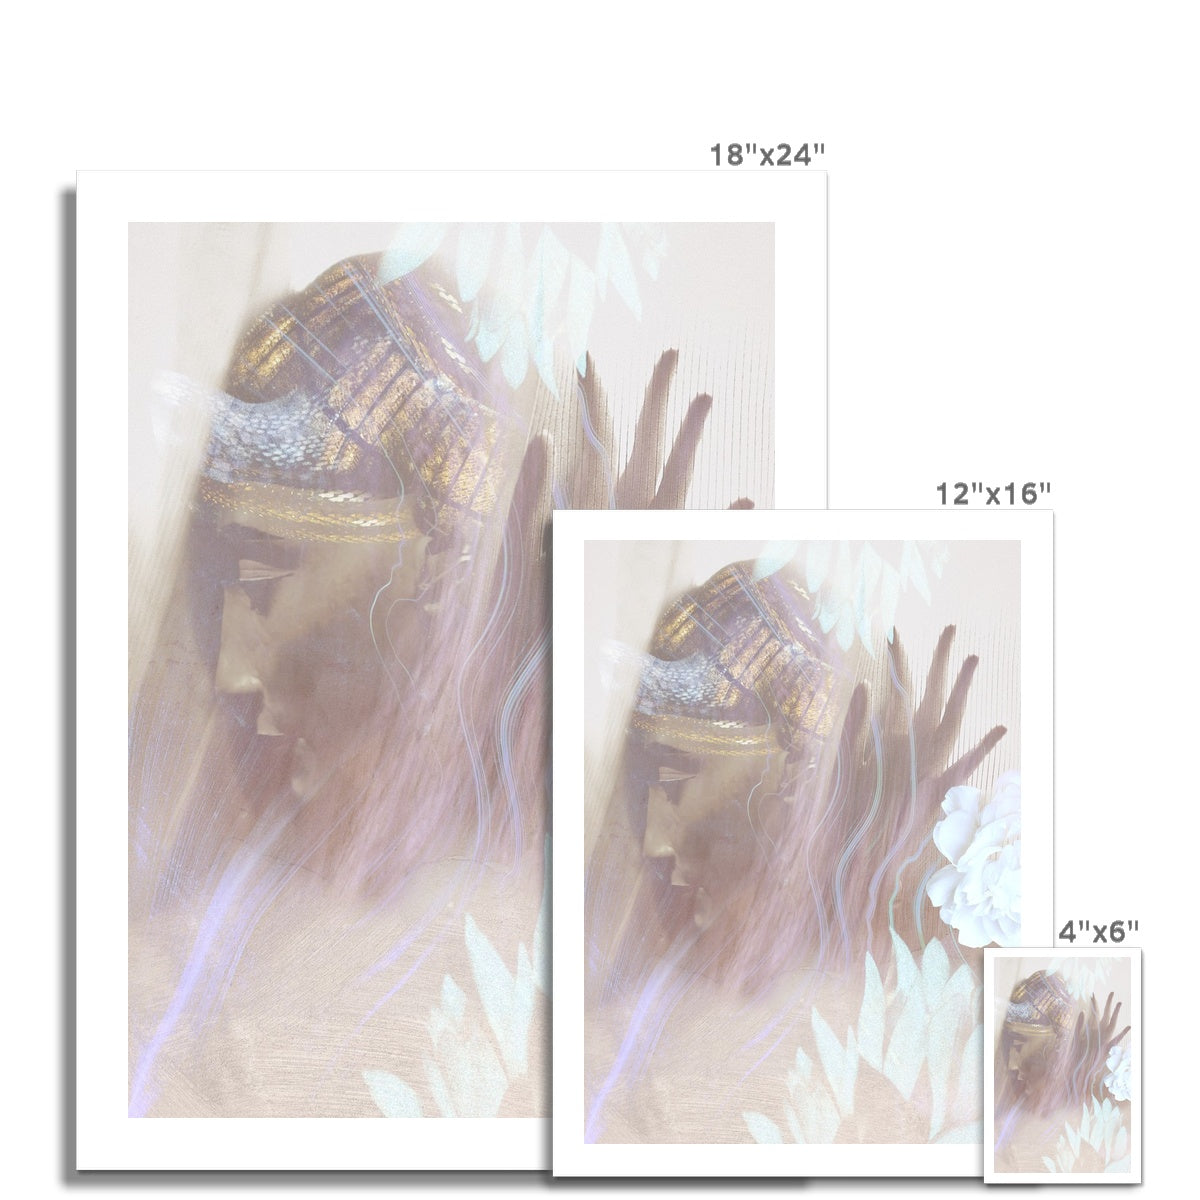 Queen Nefertiti Fine Art Print - Starseed Designs Inc.